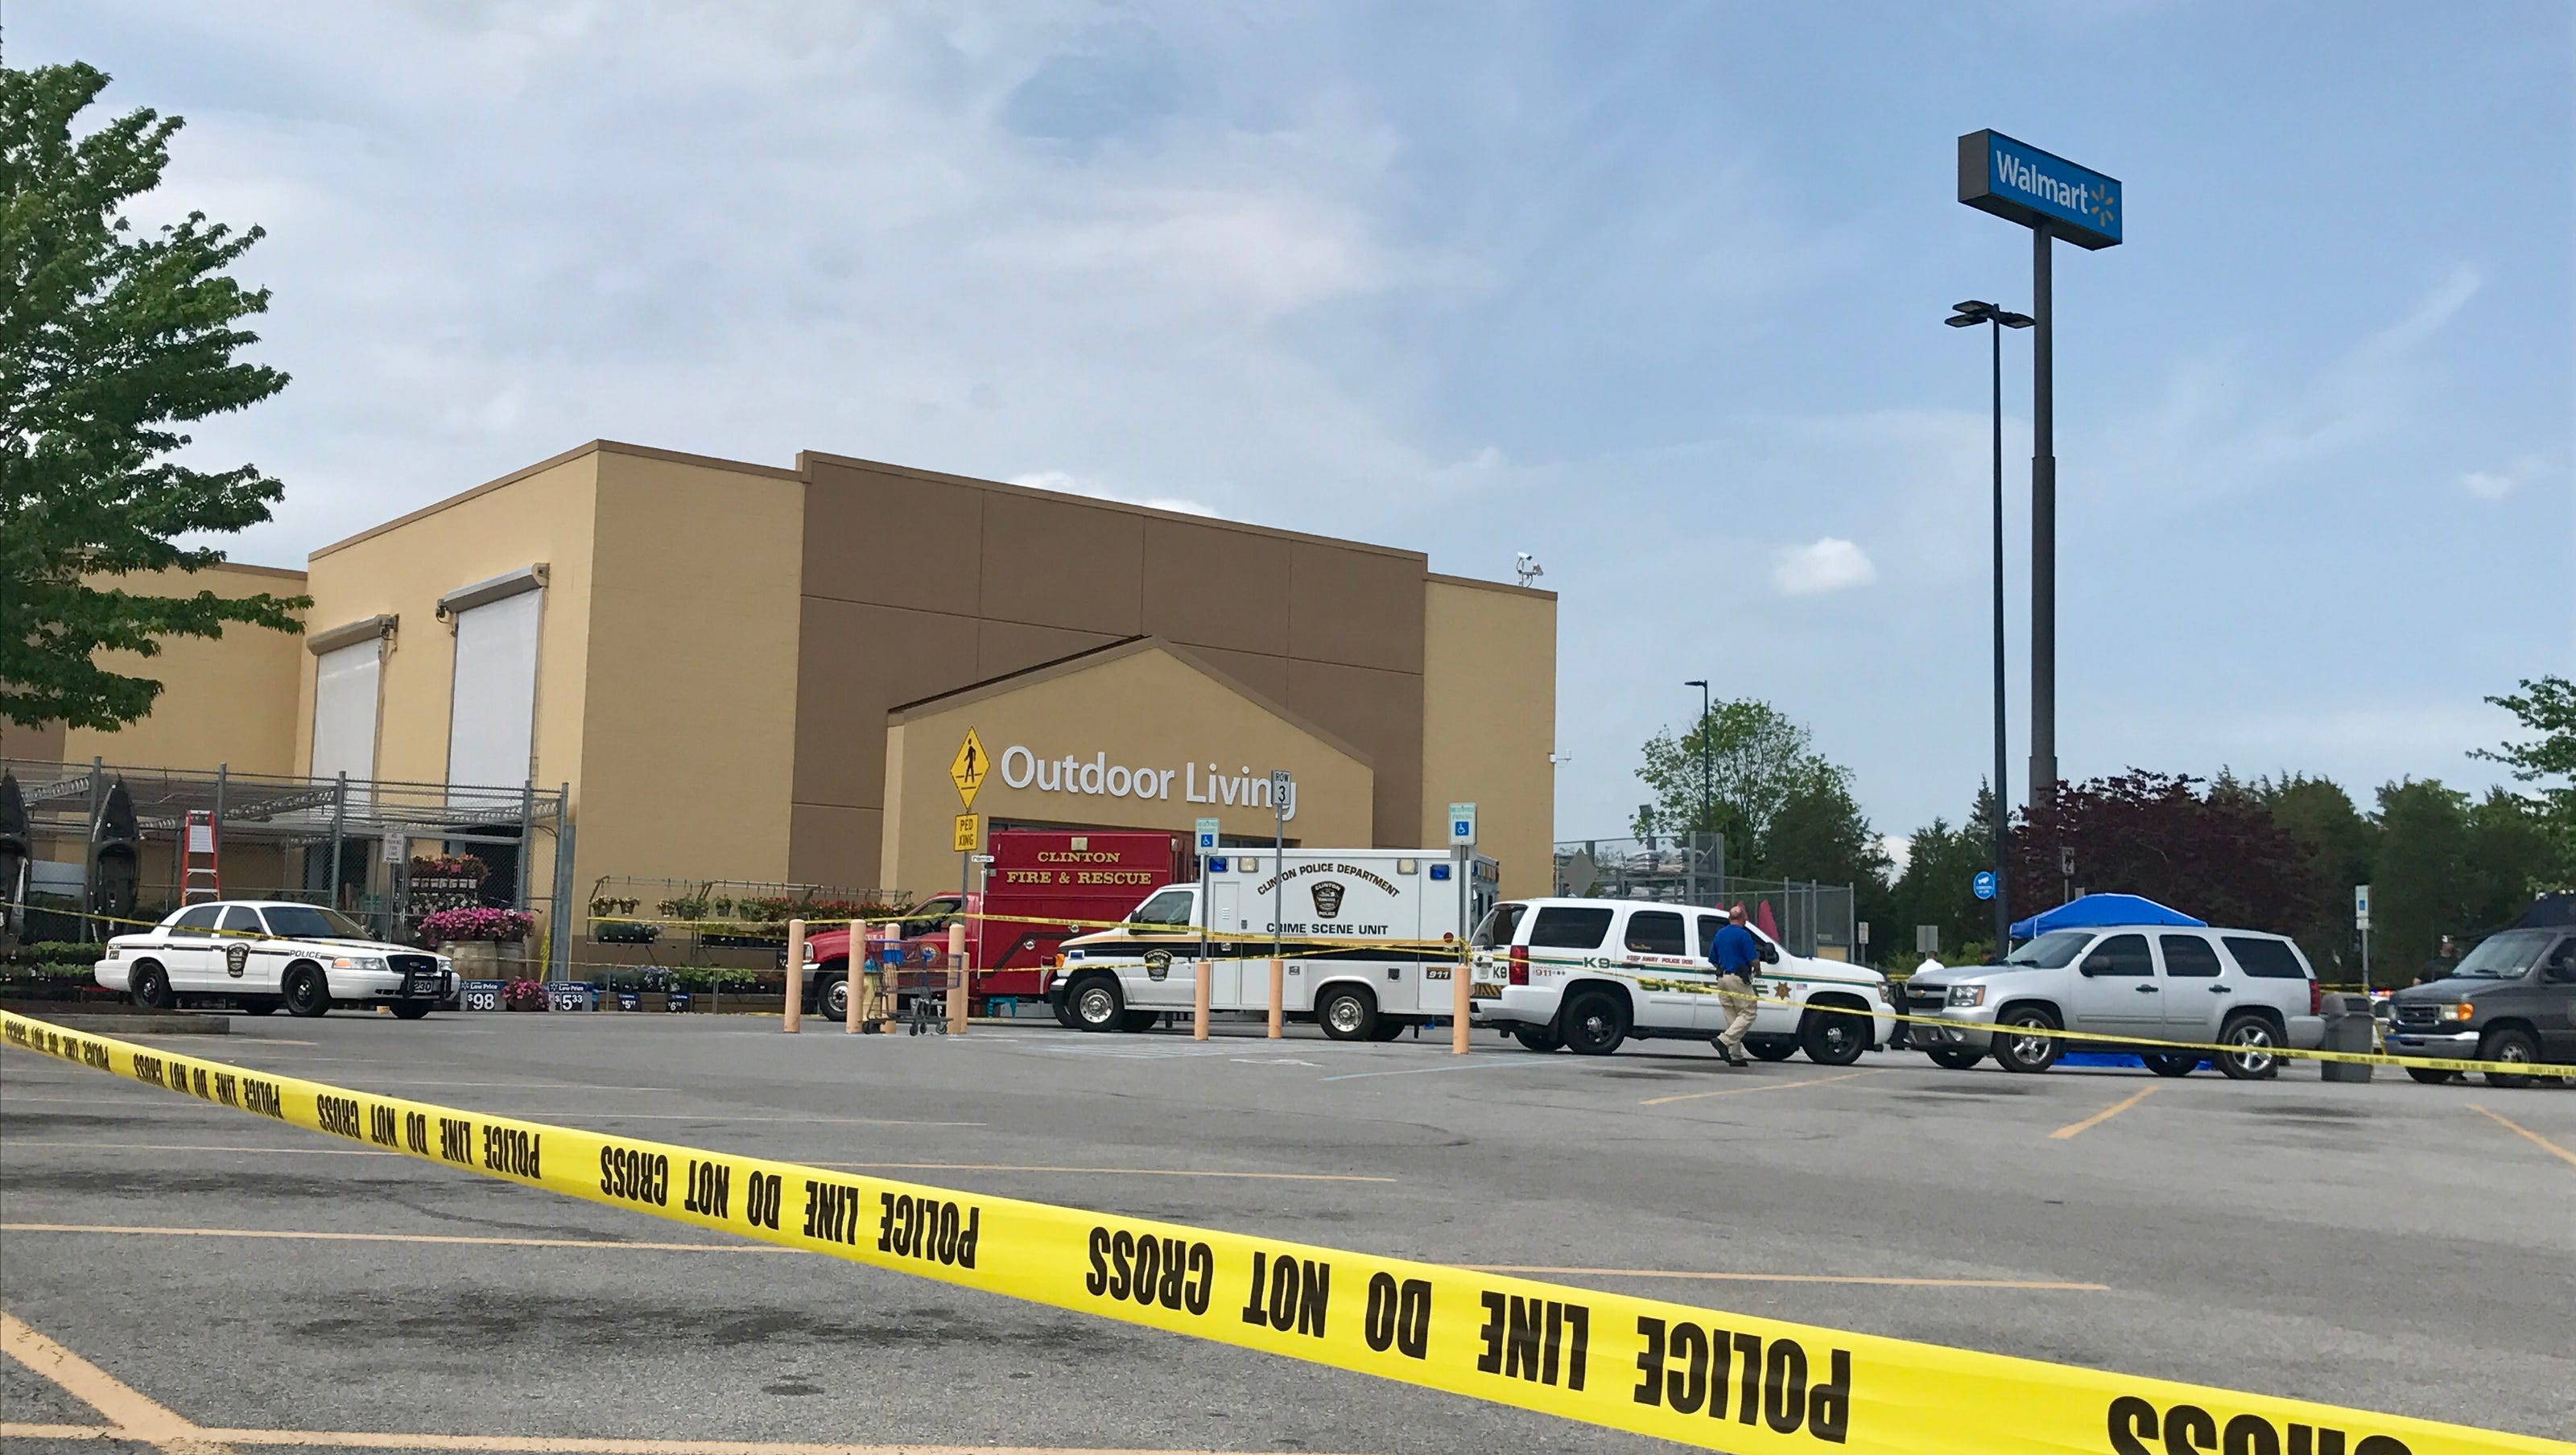 Suspect indicted in Clinton Walmart shooting death, earlier abduction